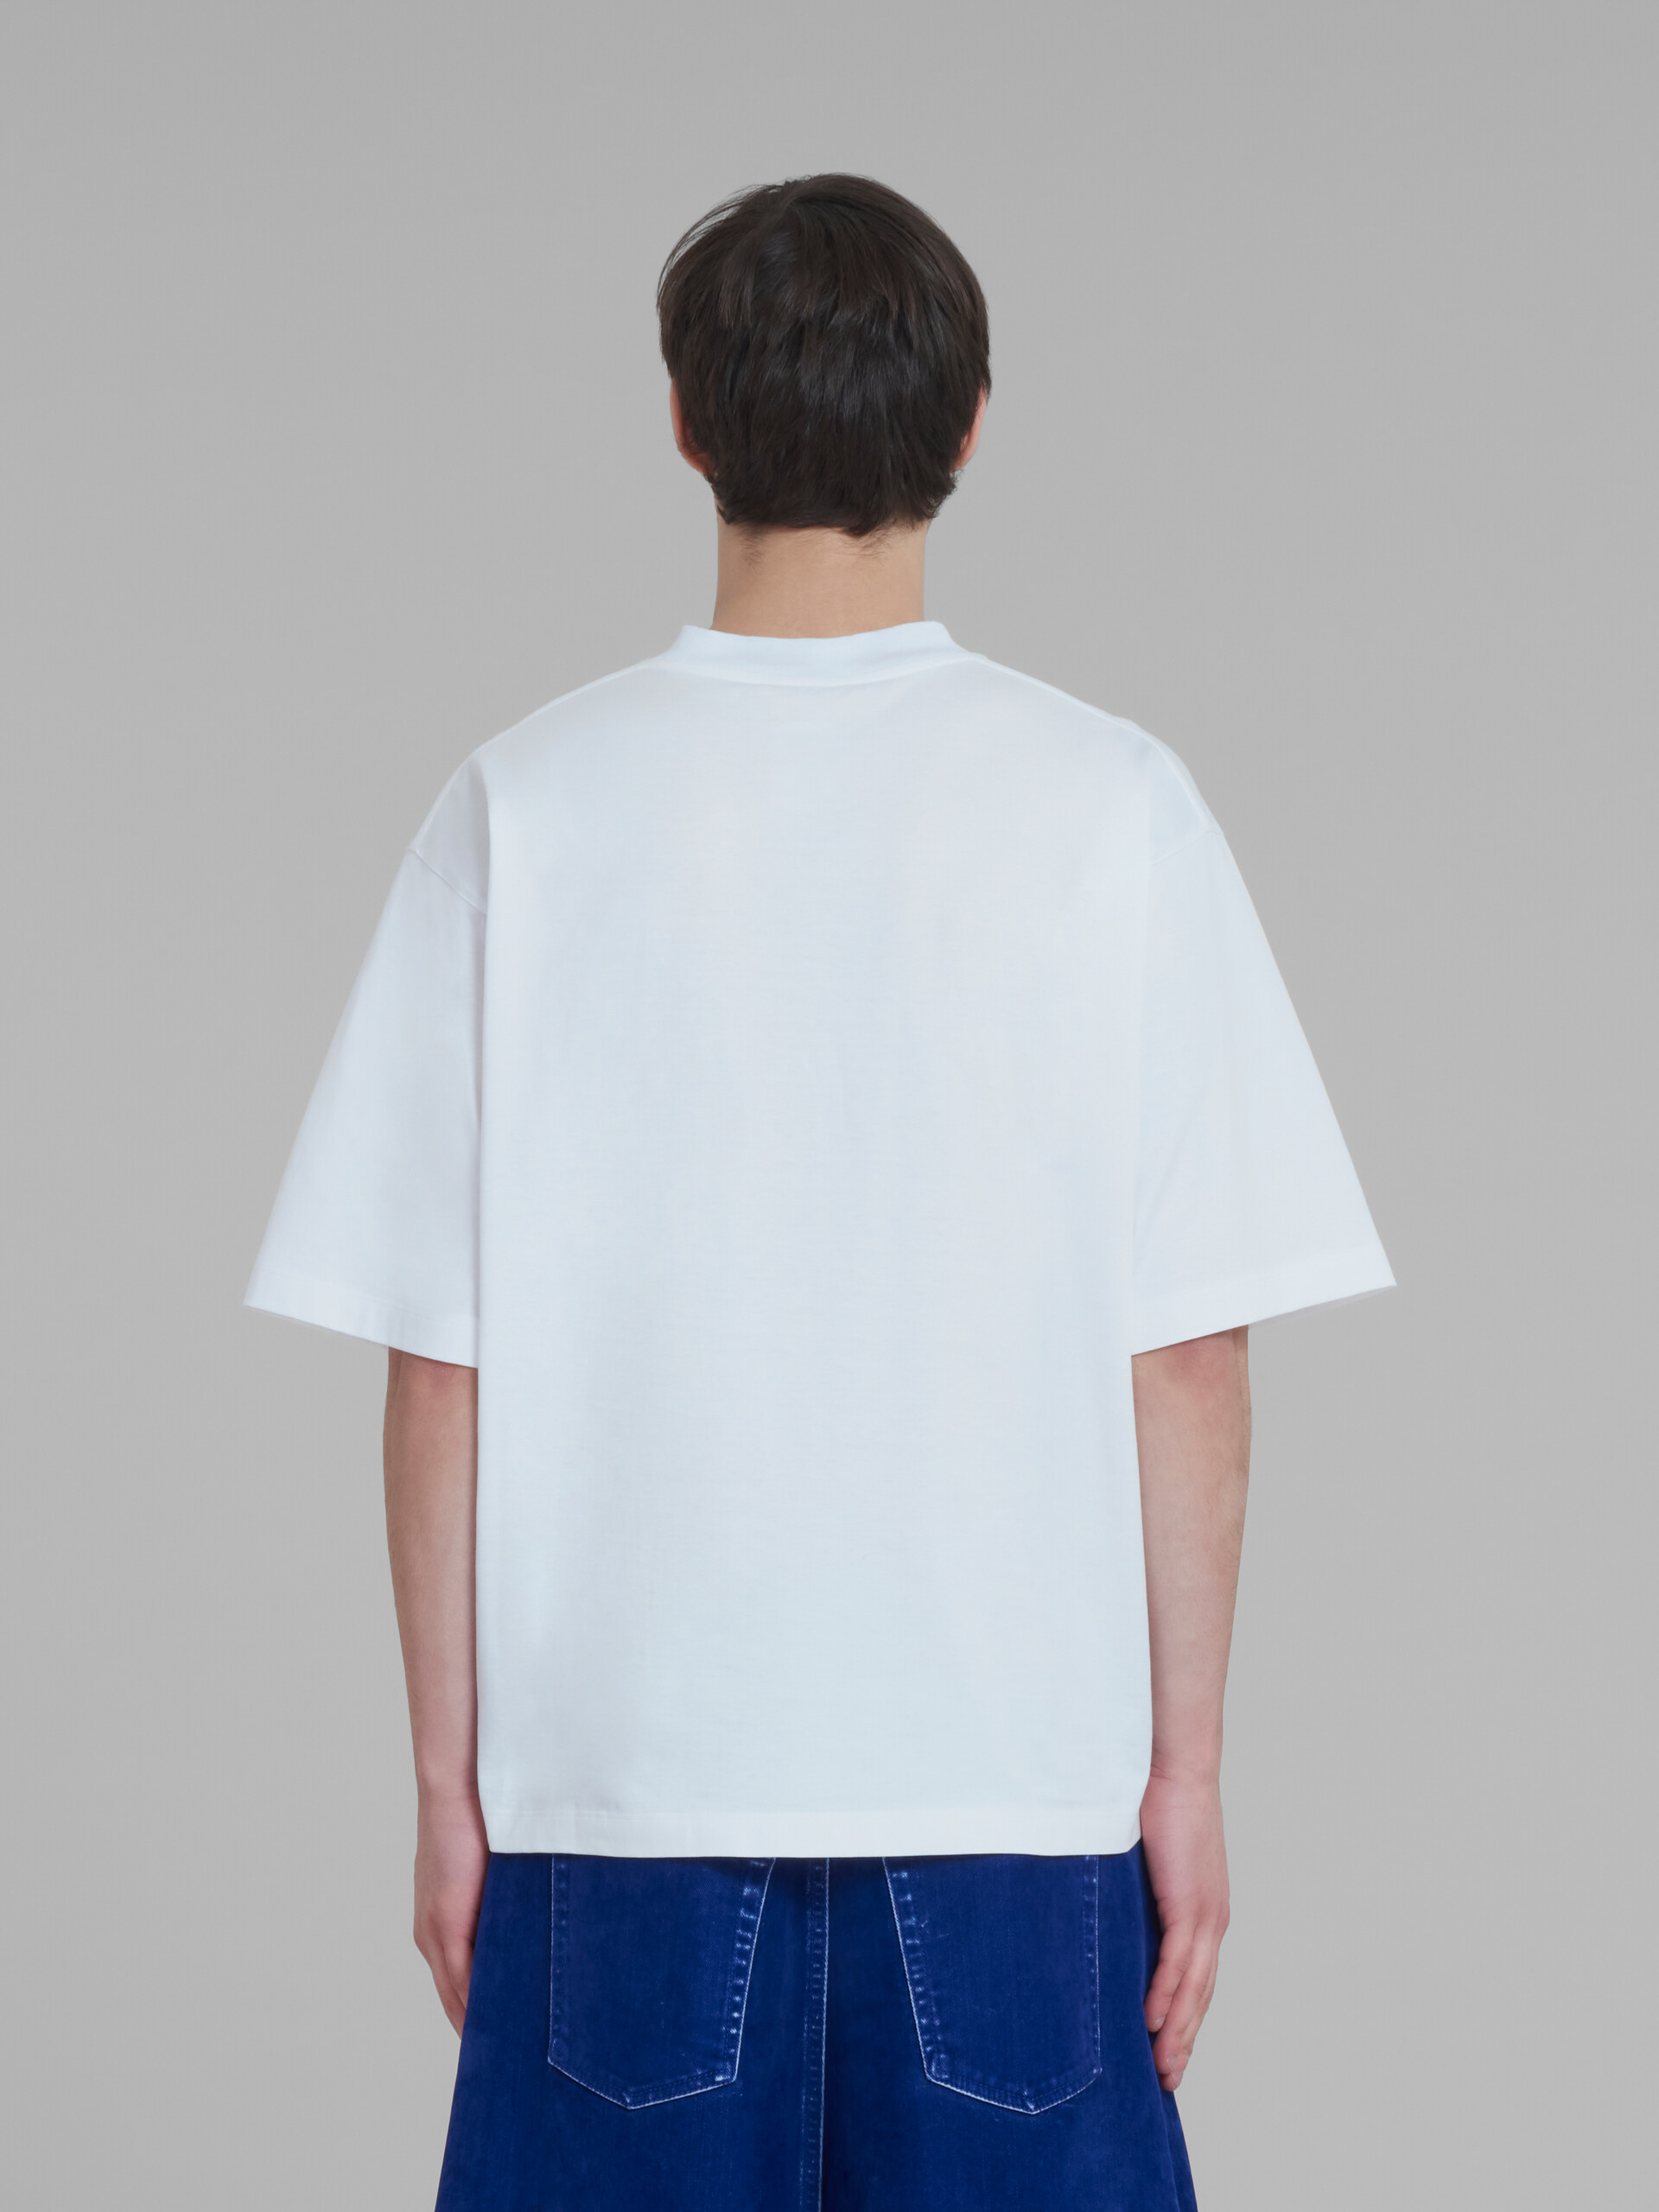 White cotton T-shirt with Marni Whirl print - T-shirts - Image 3